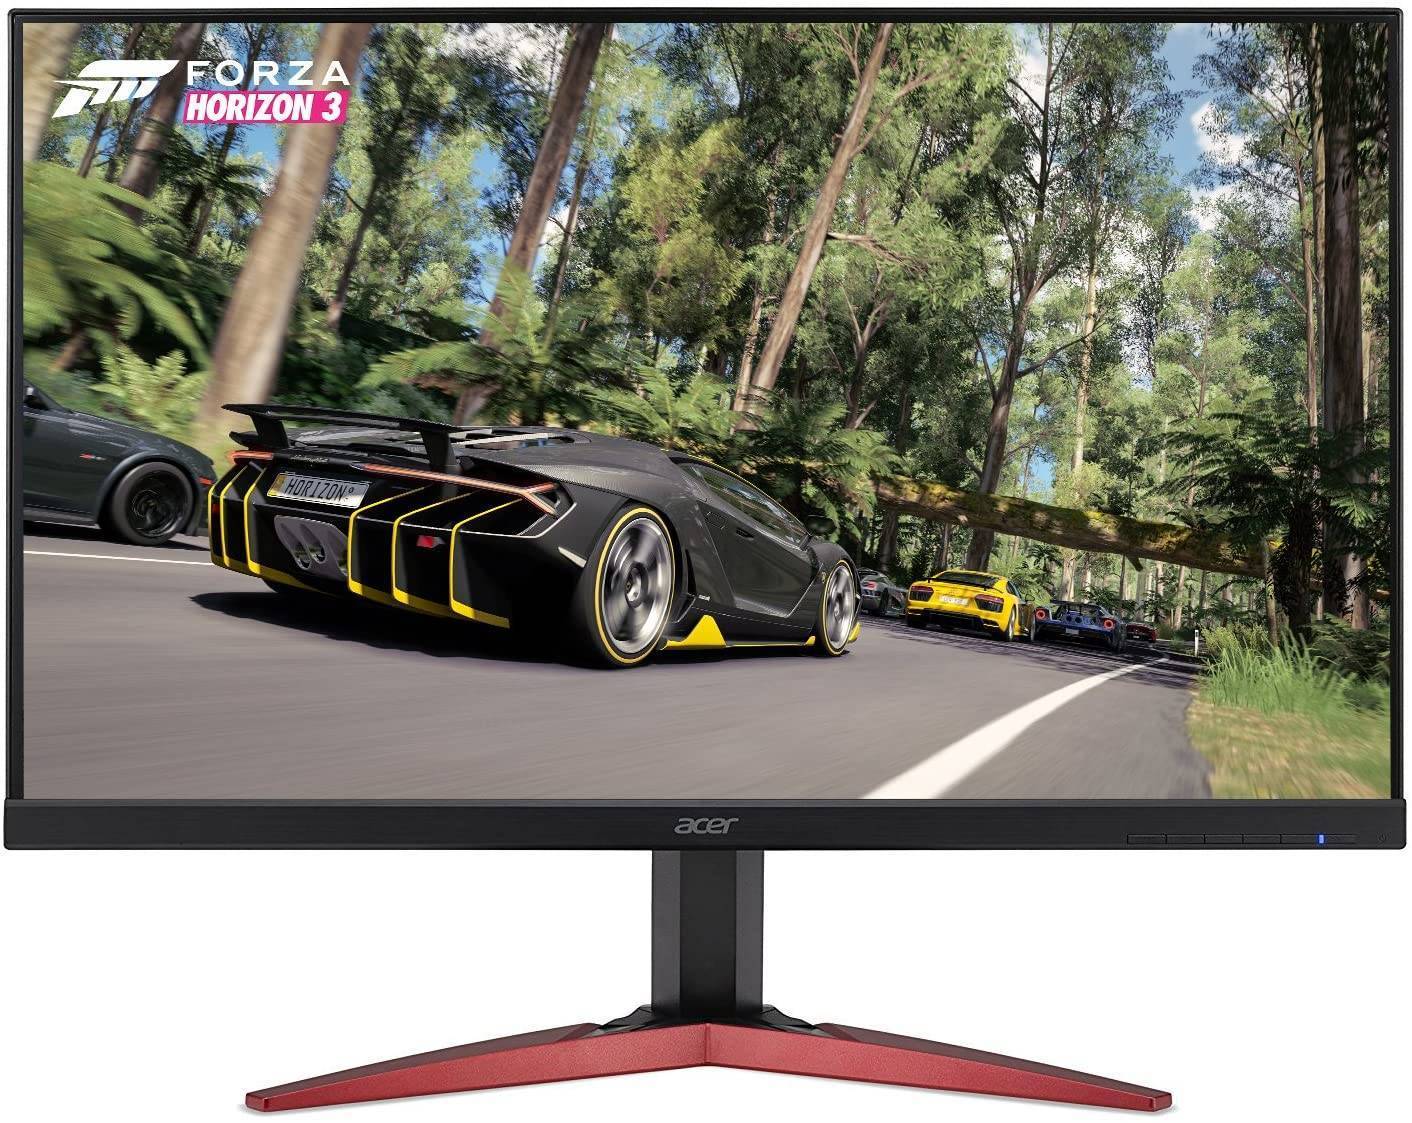 7. Acer KG271P-Fantastic Gaming monitor